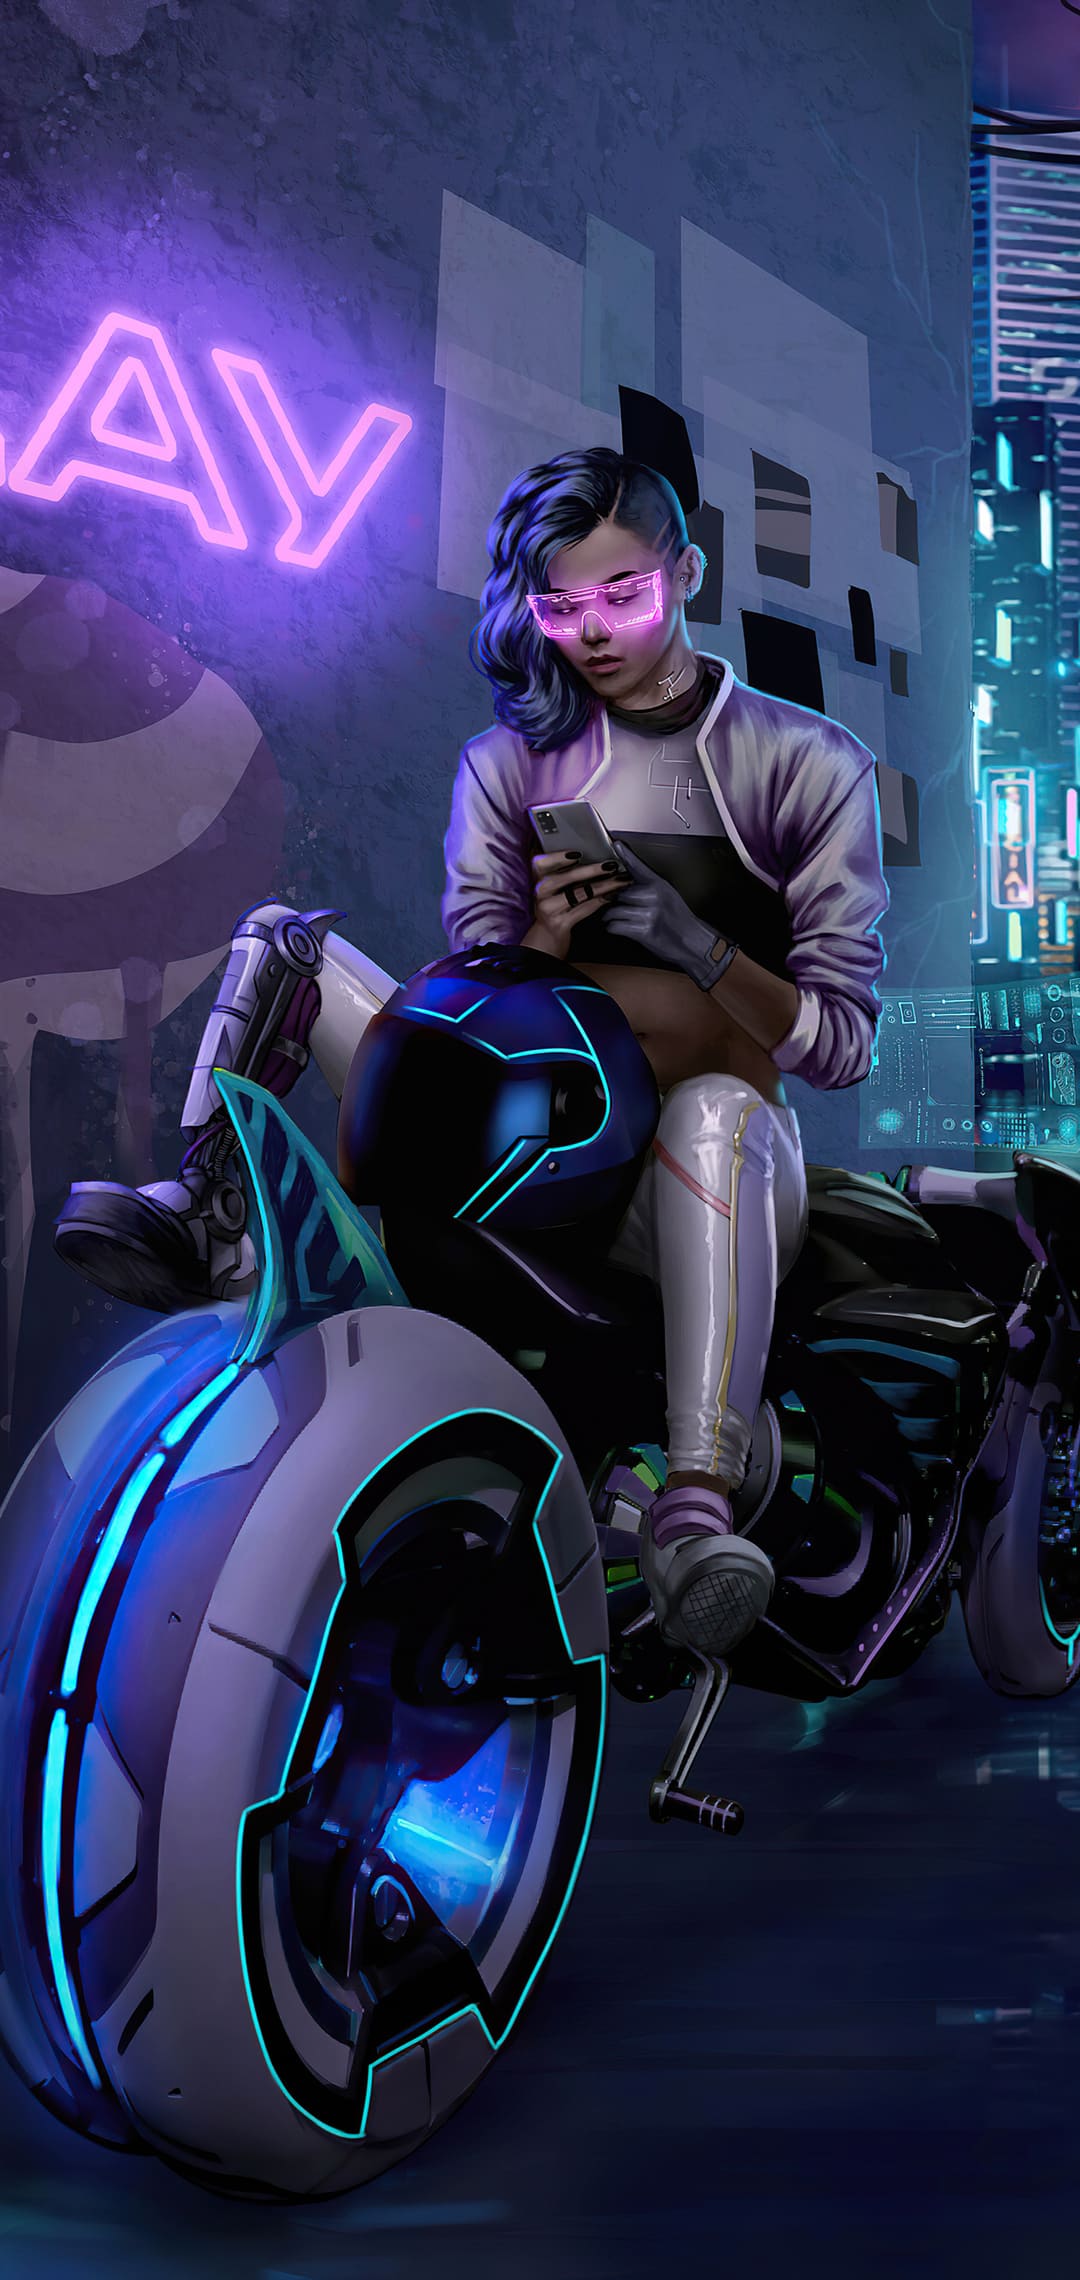 Hyper Scape 2021 Cyberpunk Girl Wallpapers